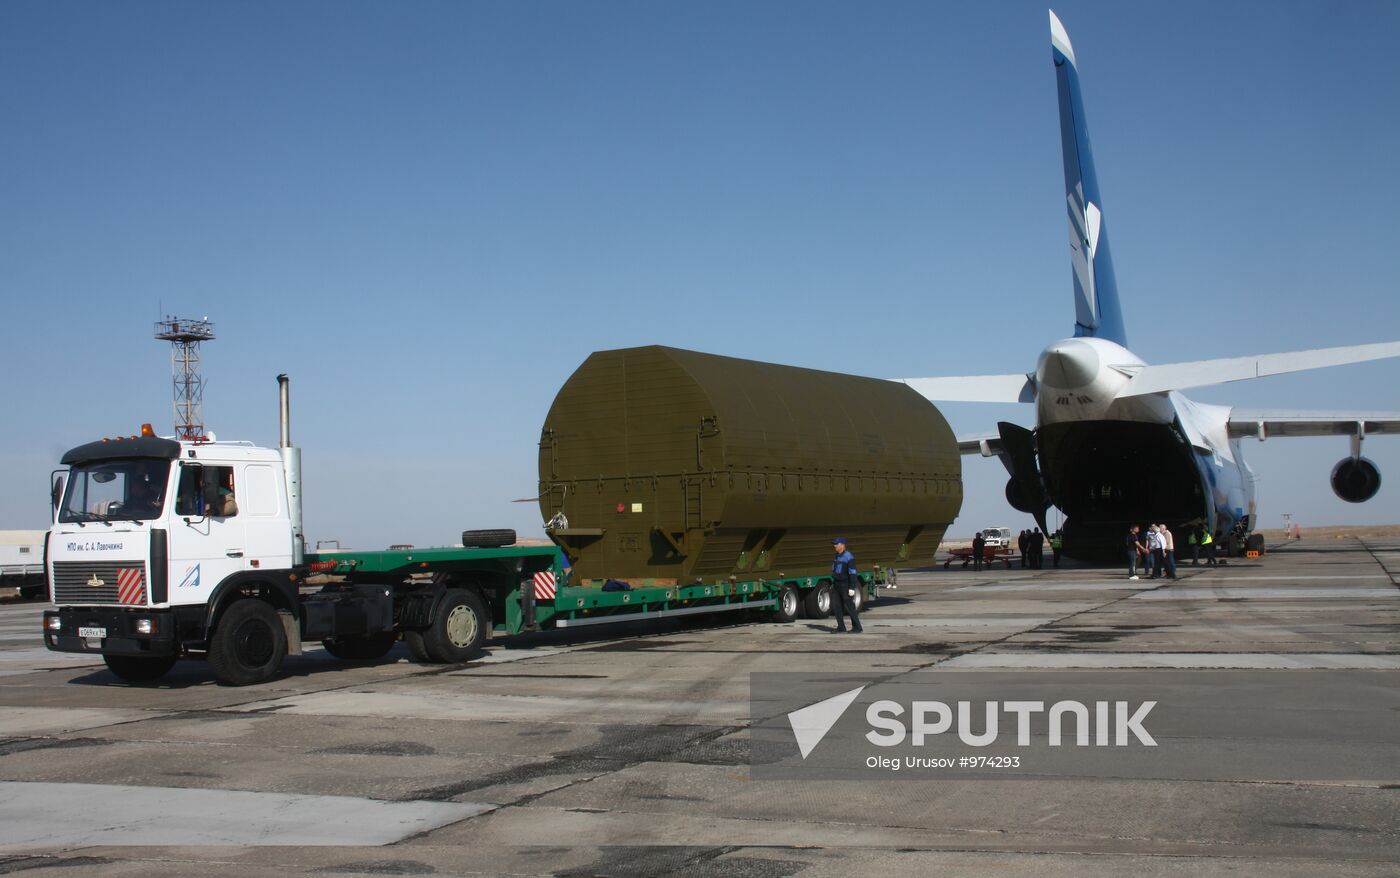 Fobos-Grunt spacecraft transported to Baikonur space center